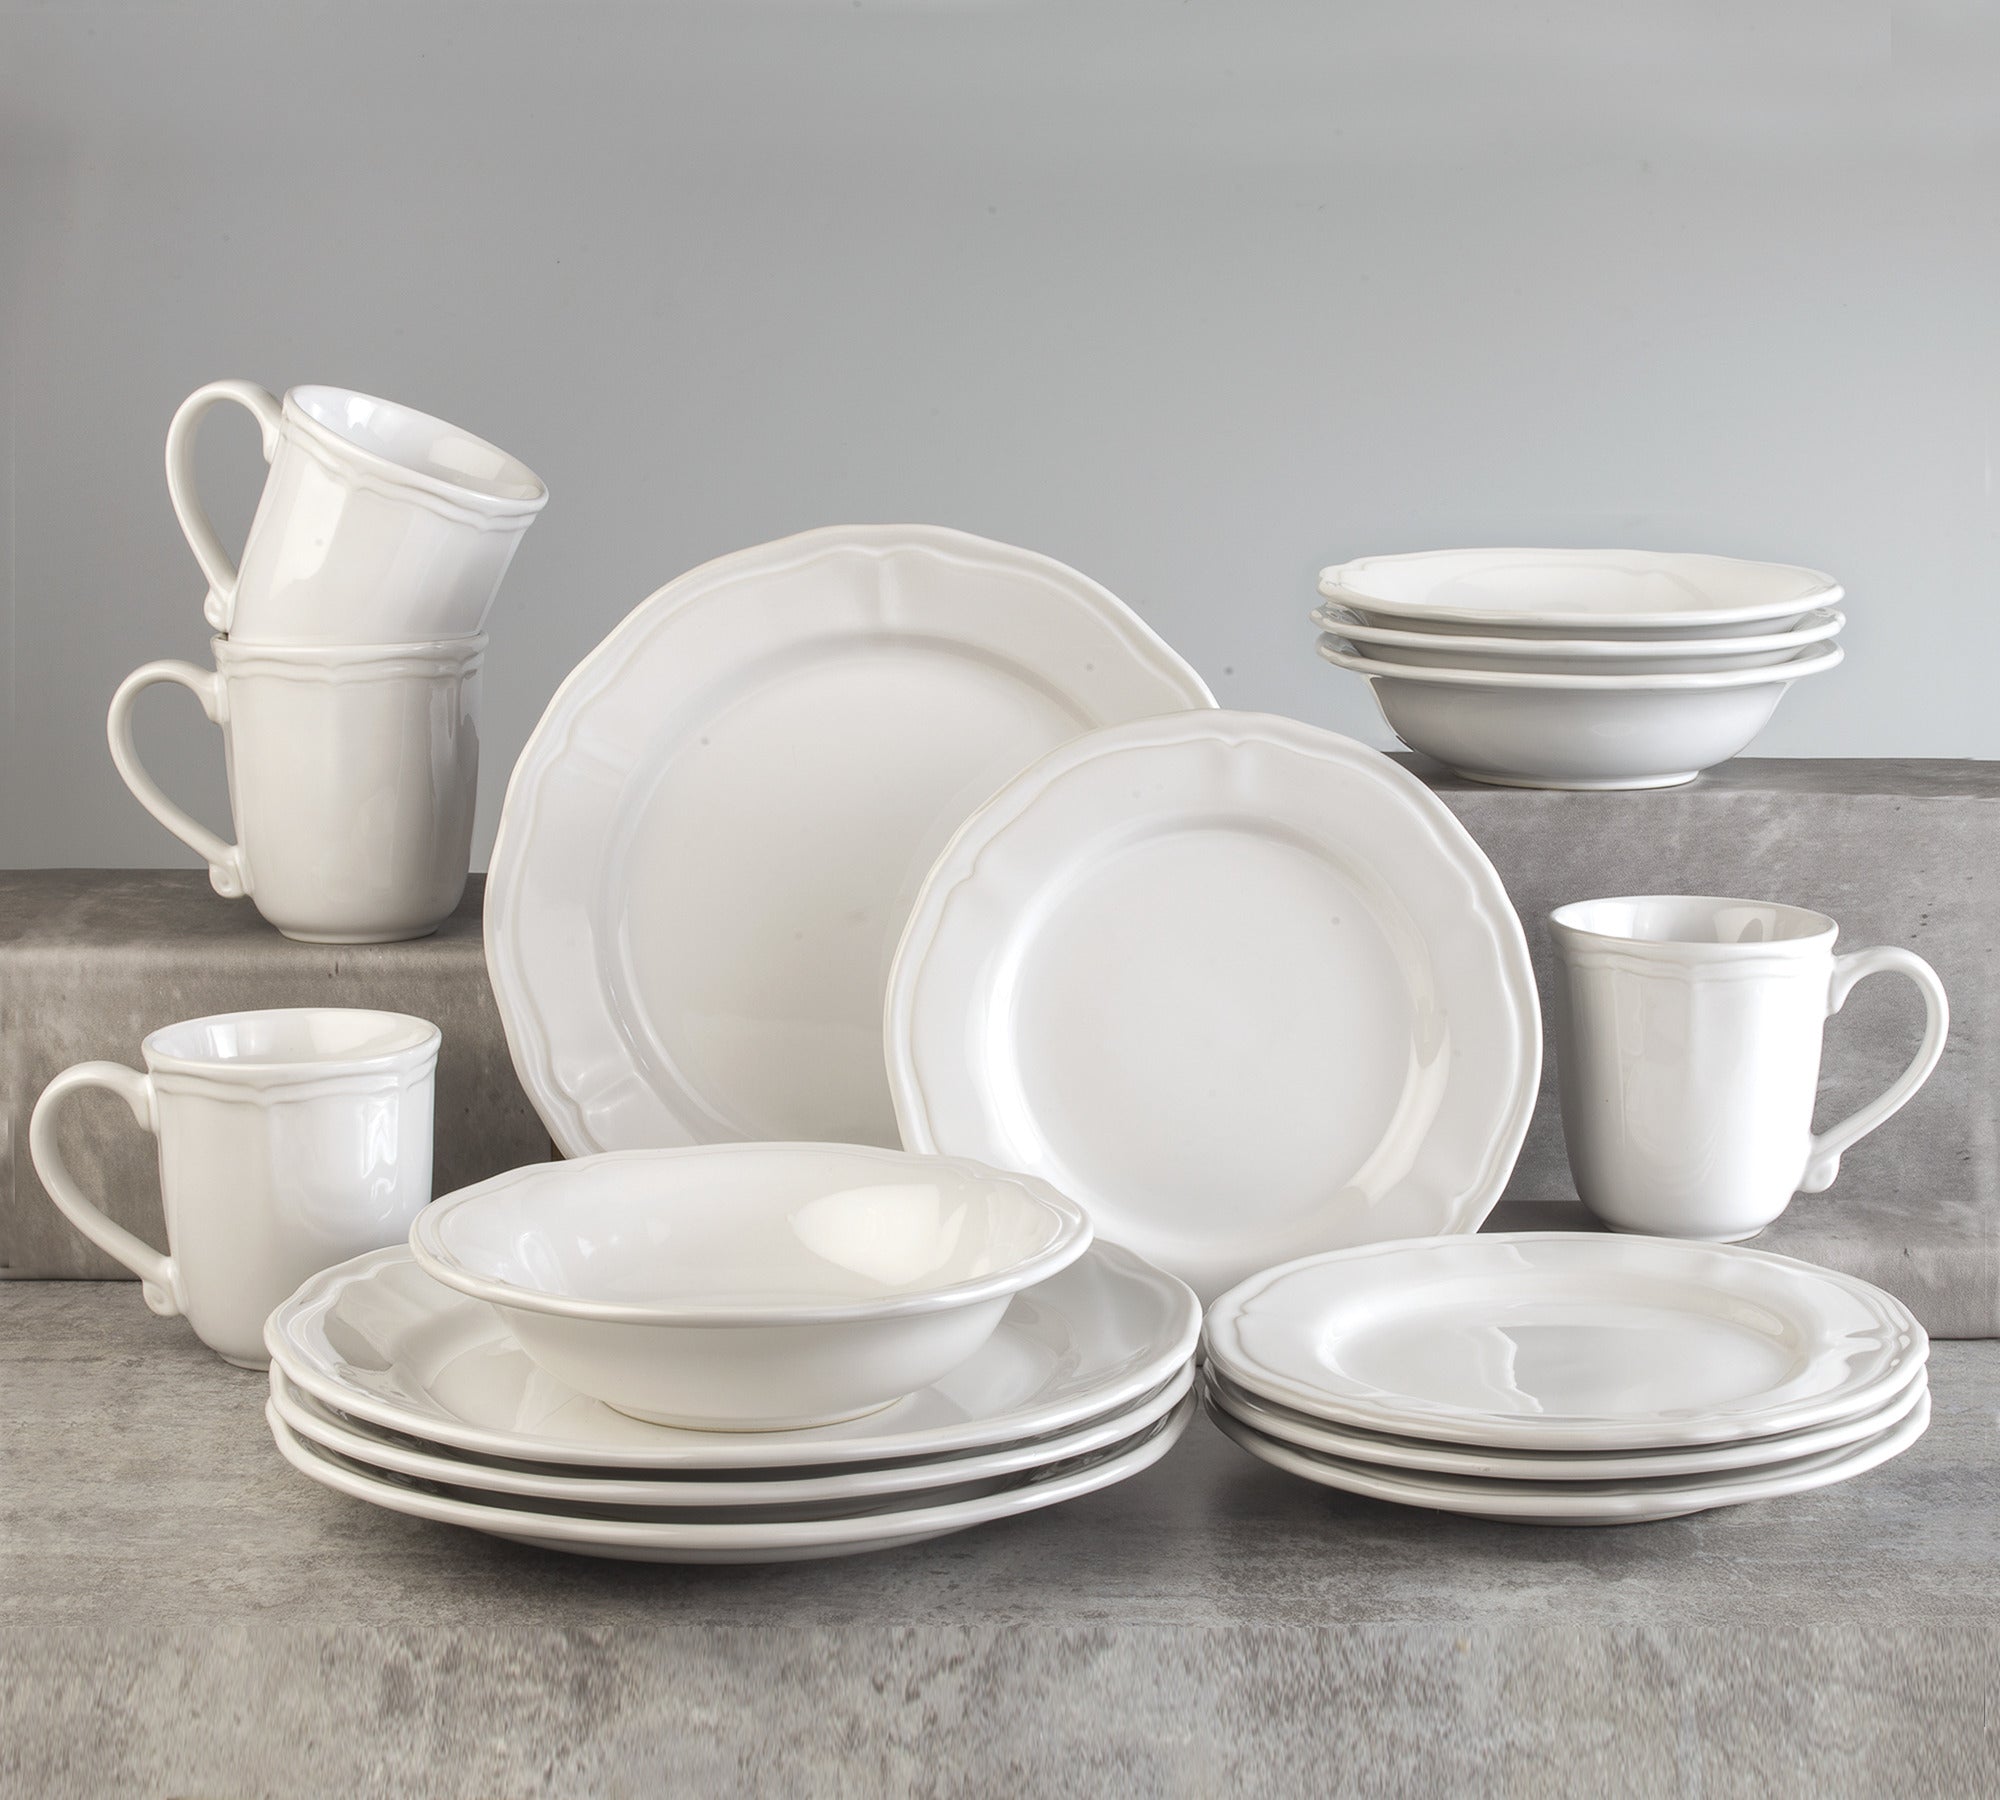 Siena 16 piece Dinnerware Set White - Euro Ceramica 